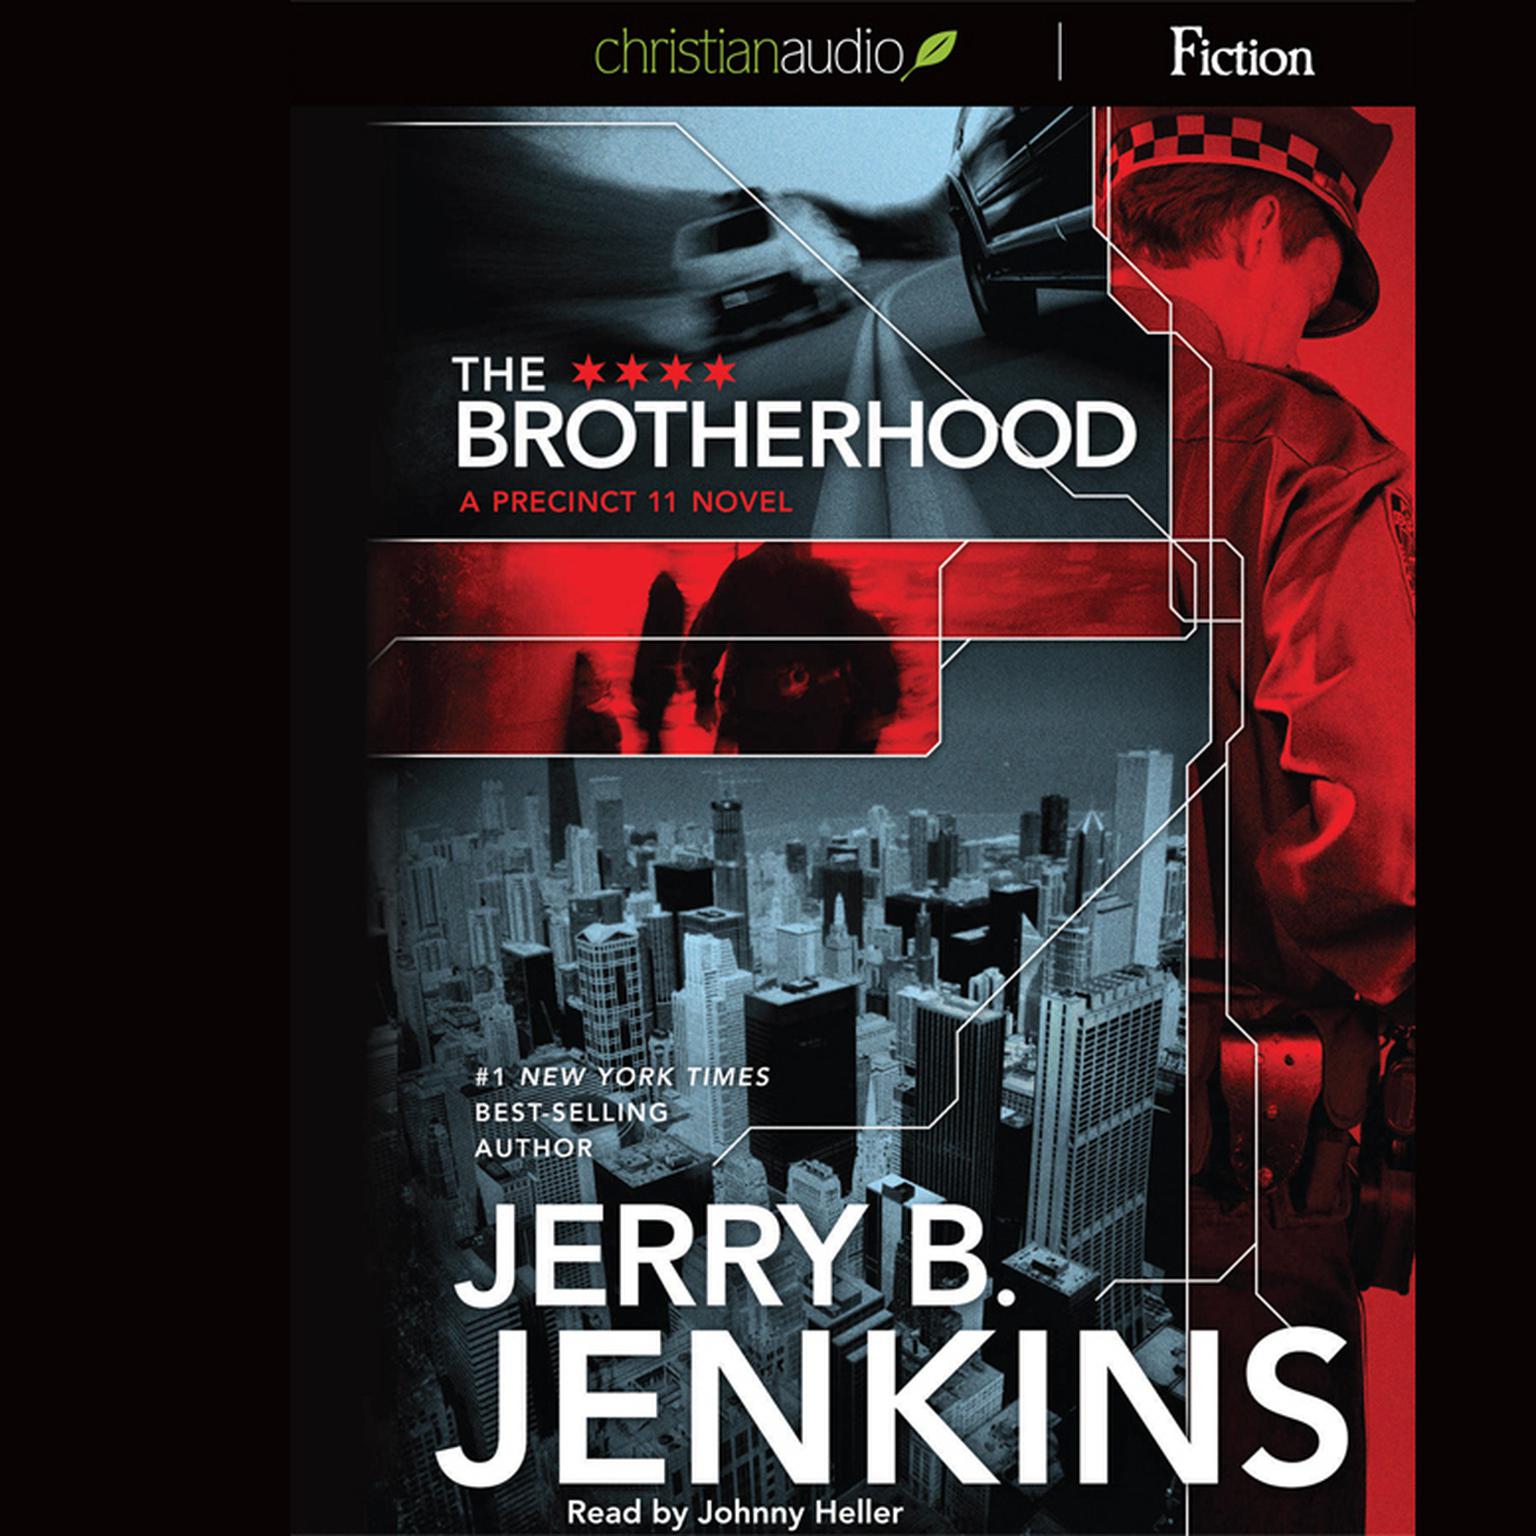 Brotherhood Audiobook, by Jerry B. Jenkins